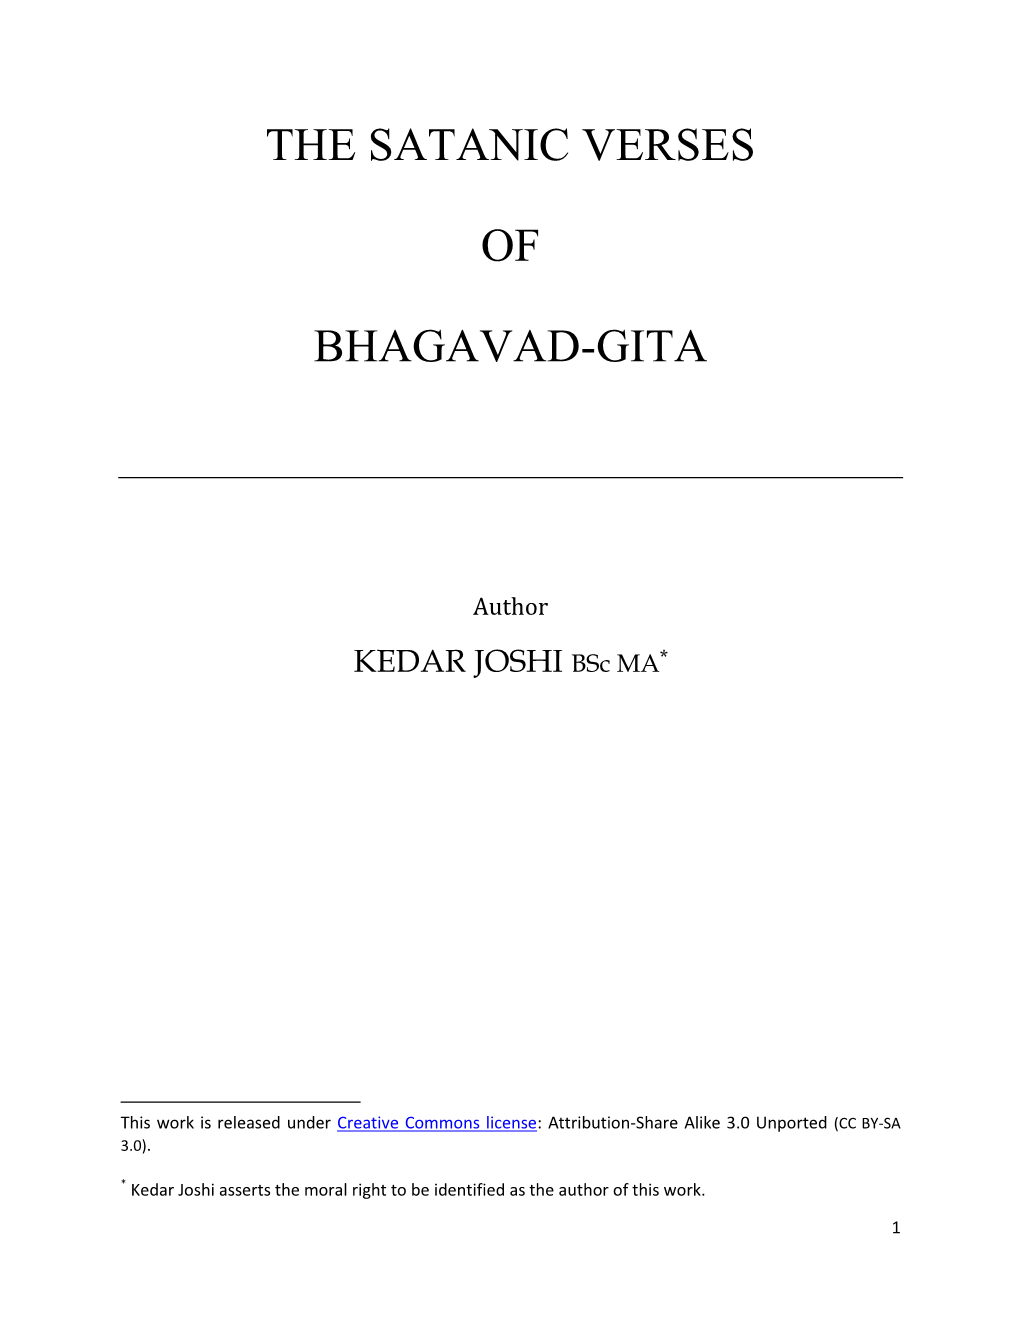 The Satanic Verses of Bhagavad-Gita)31